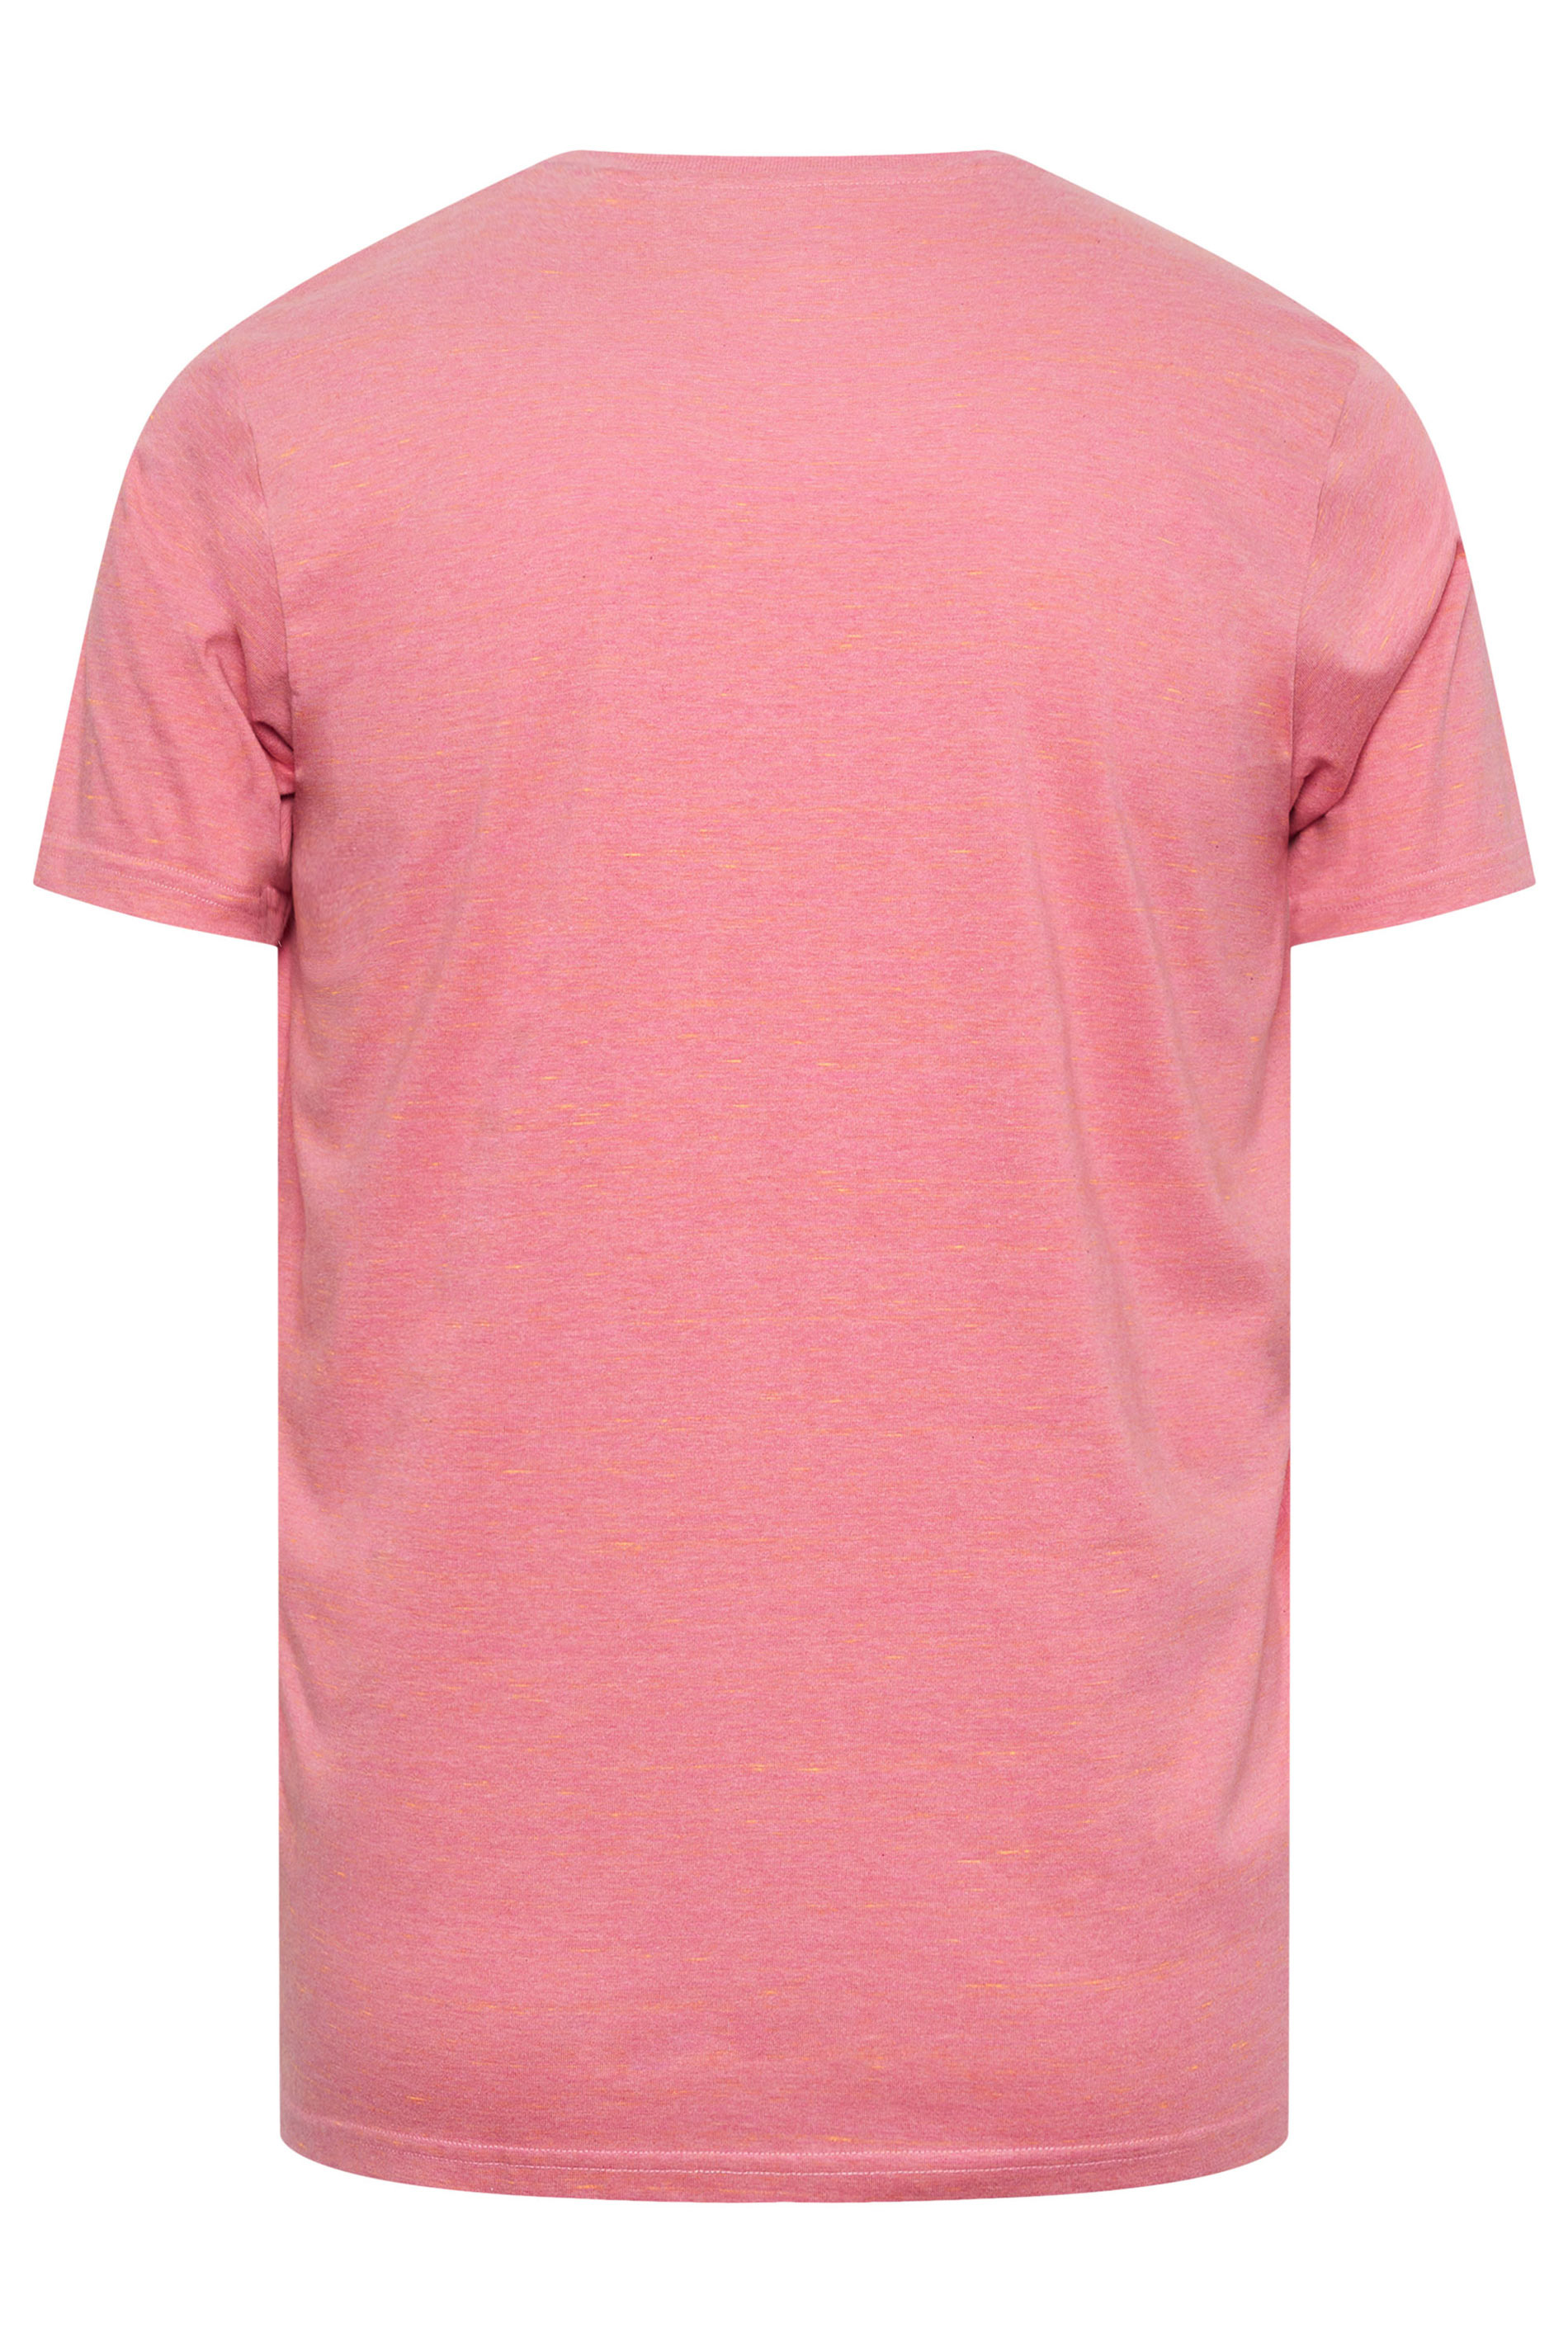 BadRhino Big & Tall Pink Injected Slub Jersey T-Shirt | BadRhino 3